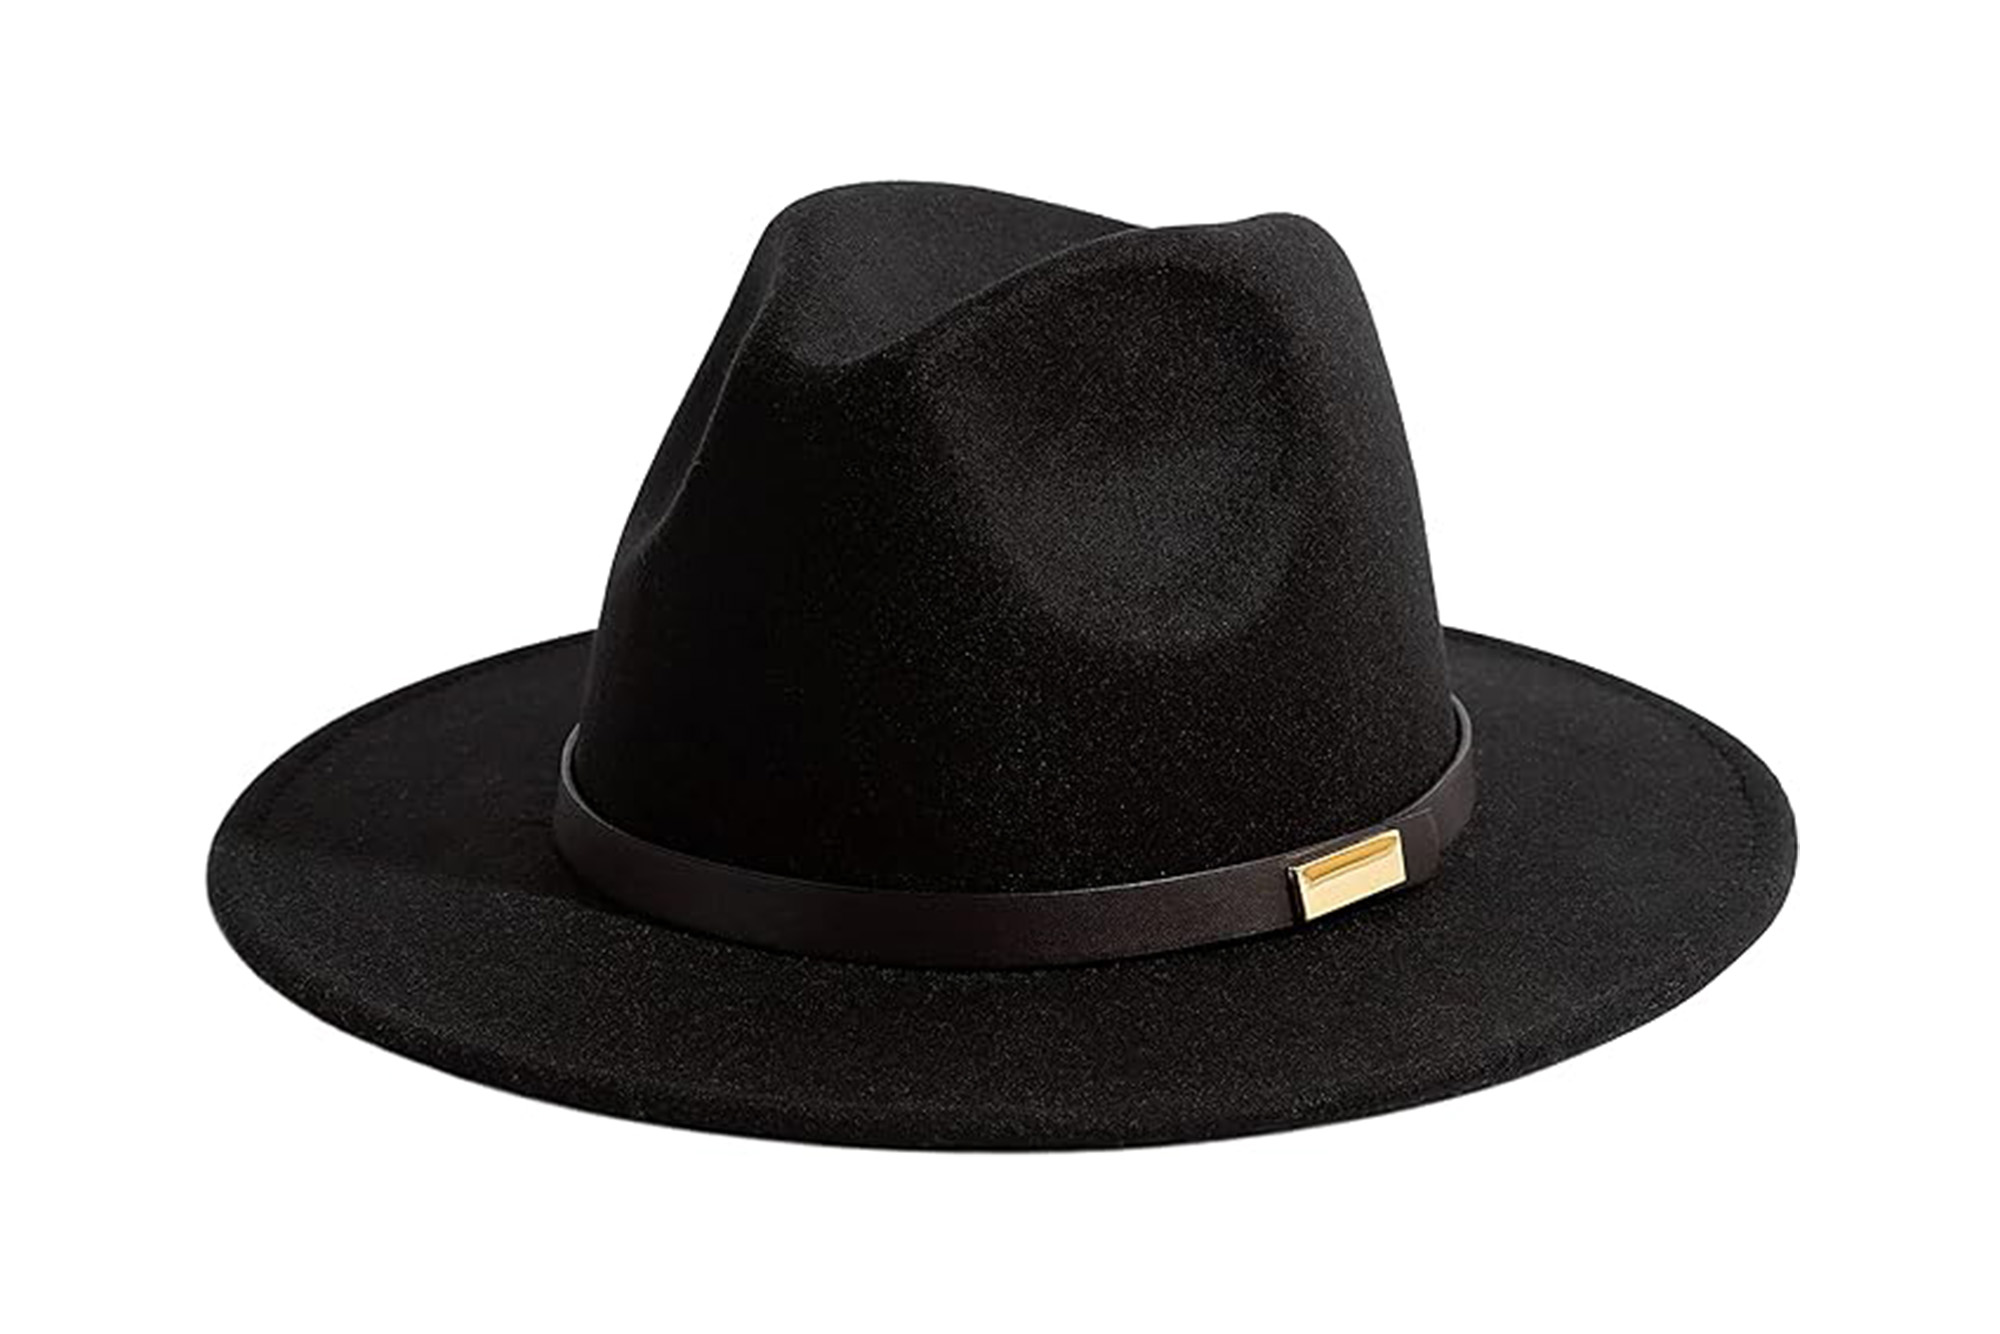 Gossifan Fedora Hats for Men Wide Brim Panama Hat with Classic Belt
